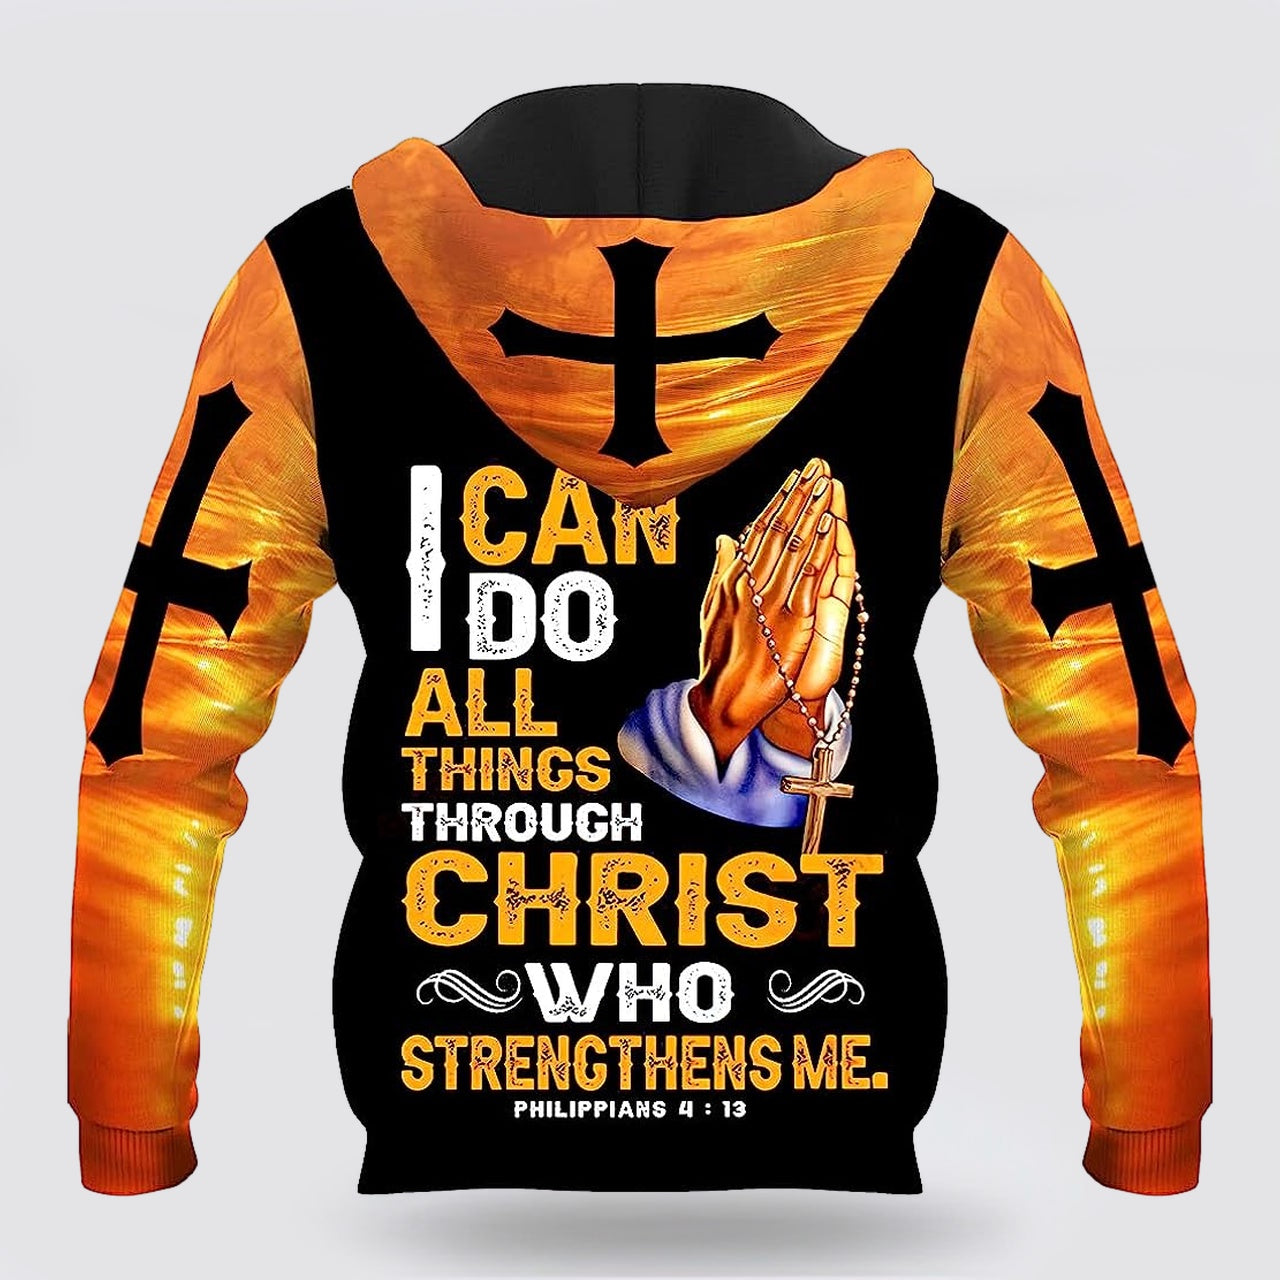 Hand Pray Cross I Can Do All Things Through Christ 3d Hoodies For Women Men - Christian Apparel Hoodies